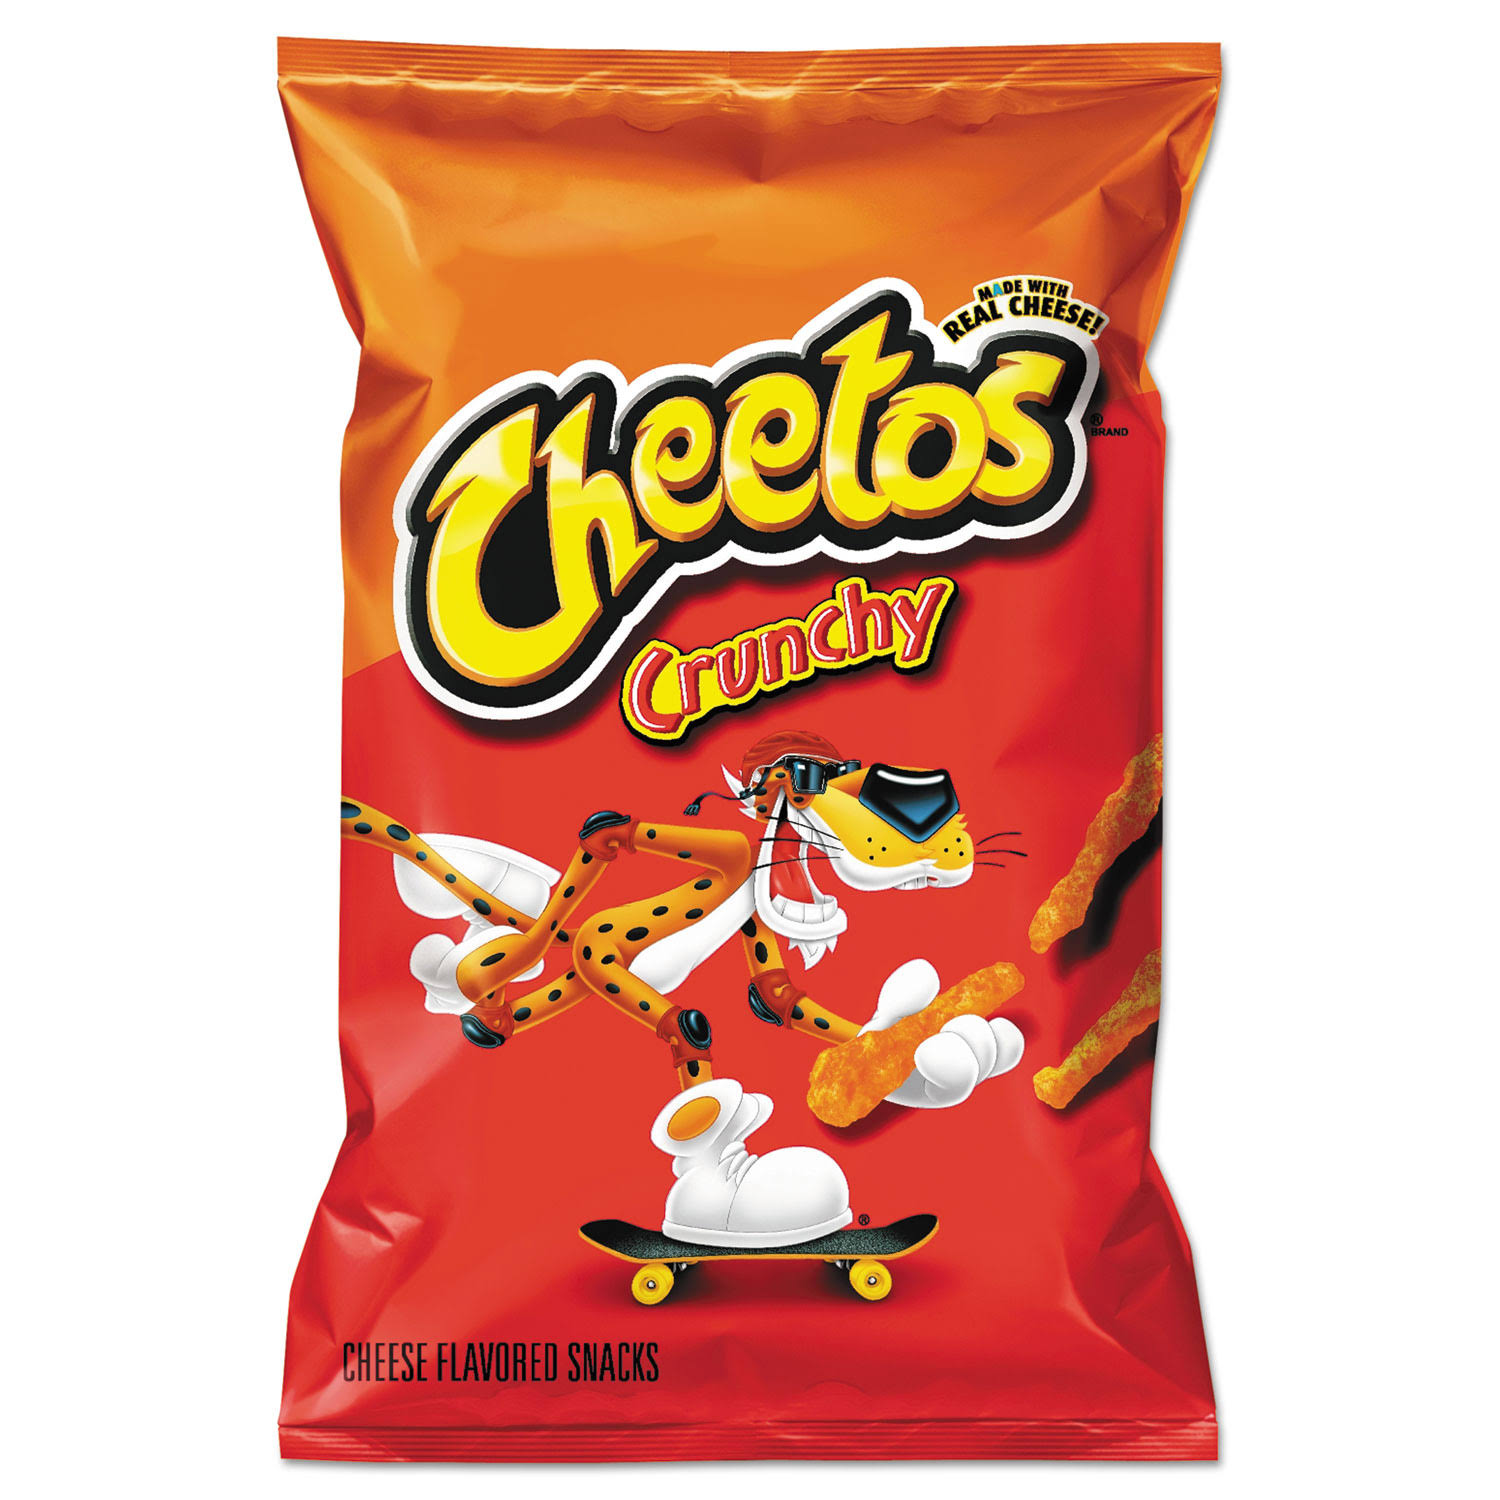 Cheetos Crunchy Snacks - Cheese Flavored, 56.7g